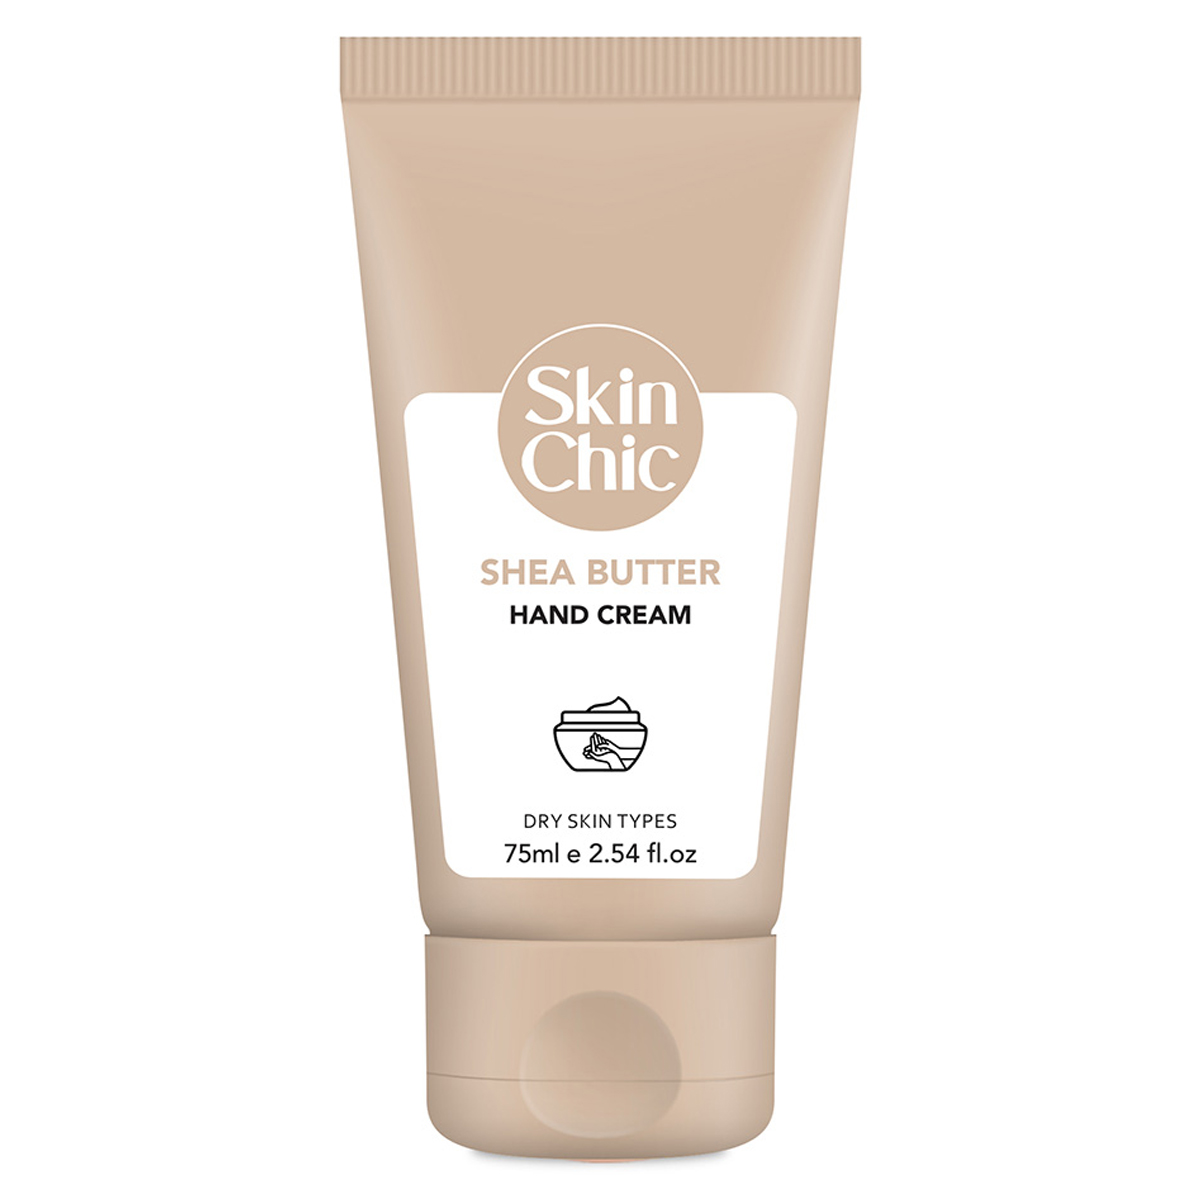 کرم دست شی باتر~Shea Butter Hand Cream~SKIN CHIC